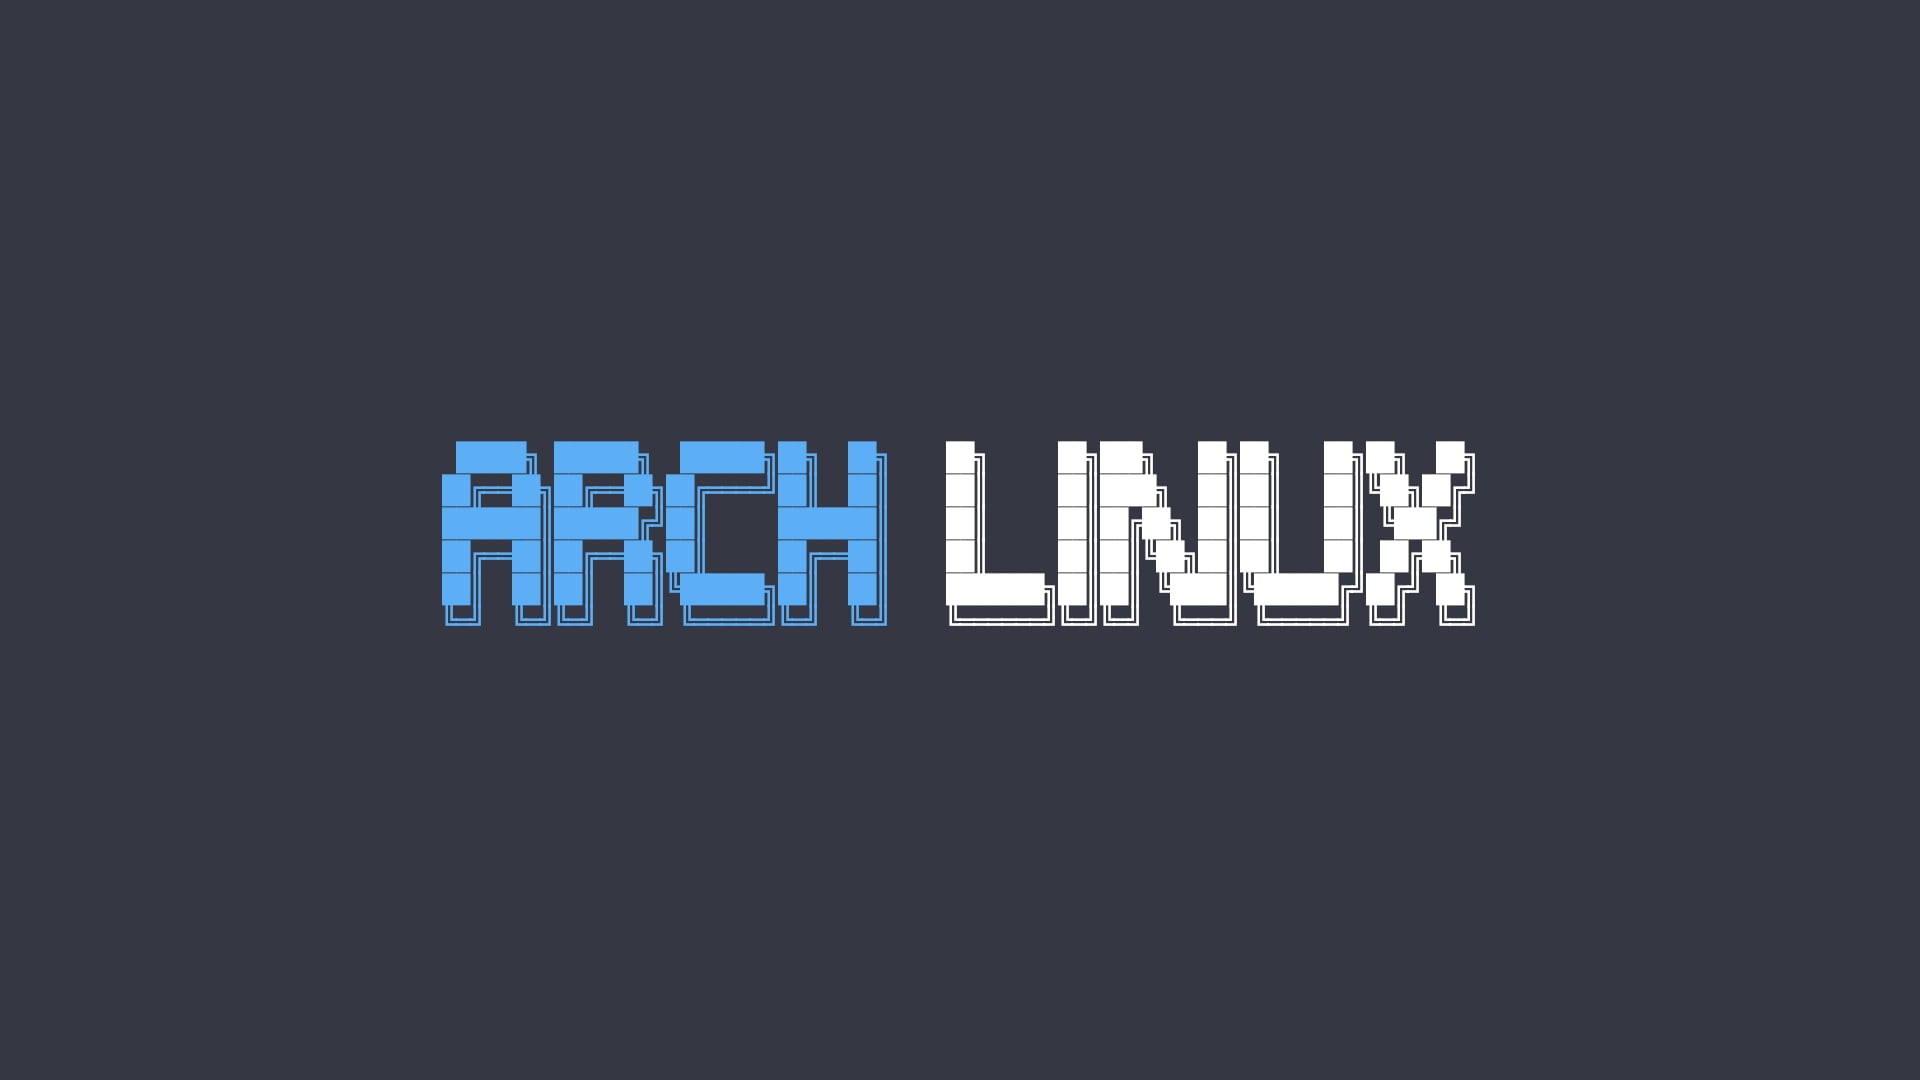 Arch Linux, ASCII art, terminal, blue